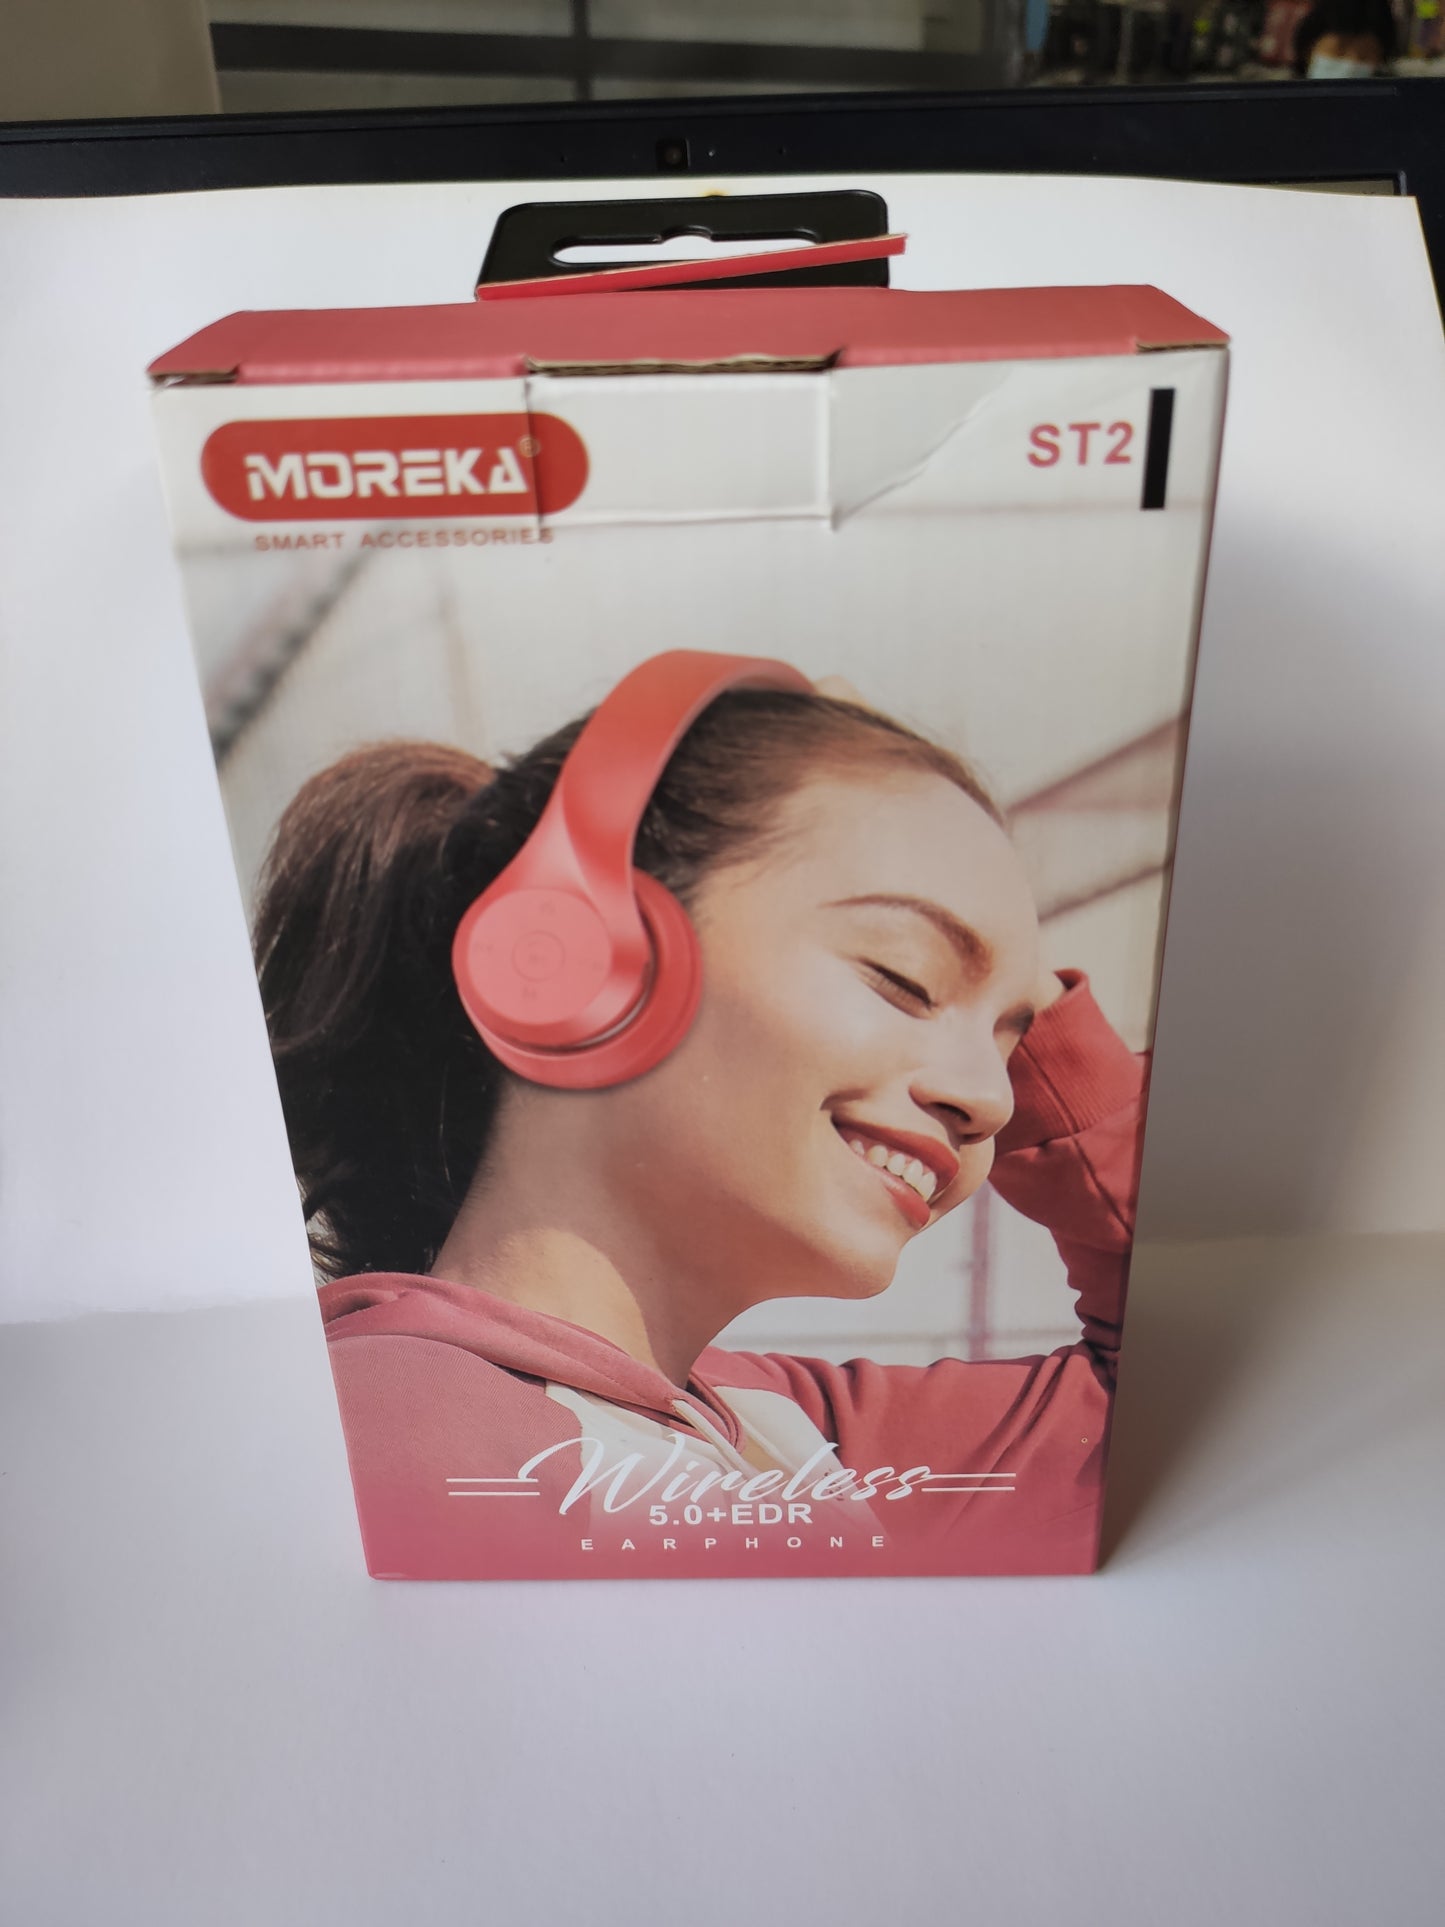 Audífonos Bluetooth Moreka ST2 5.0+EDR RADIO MP3